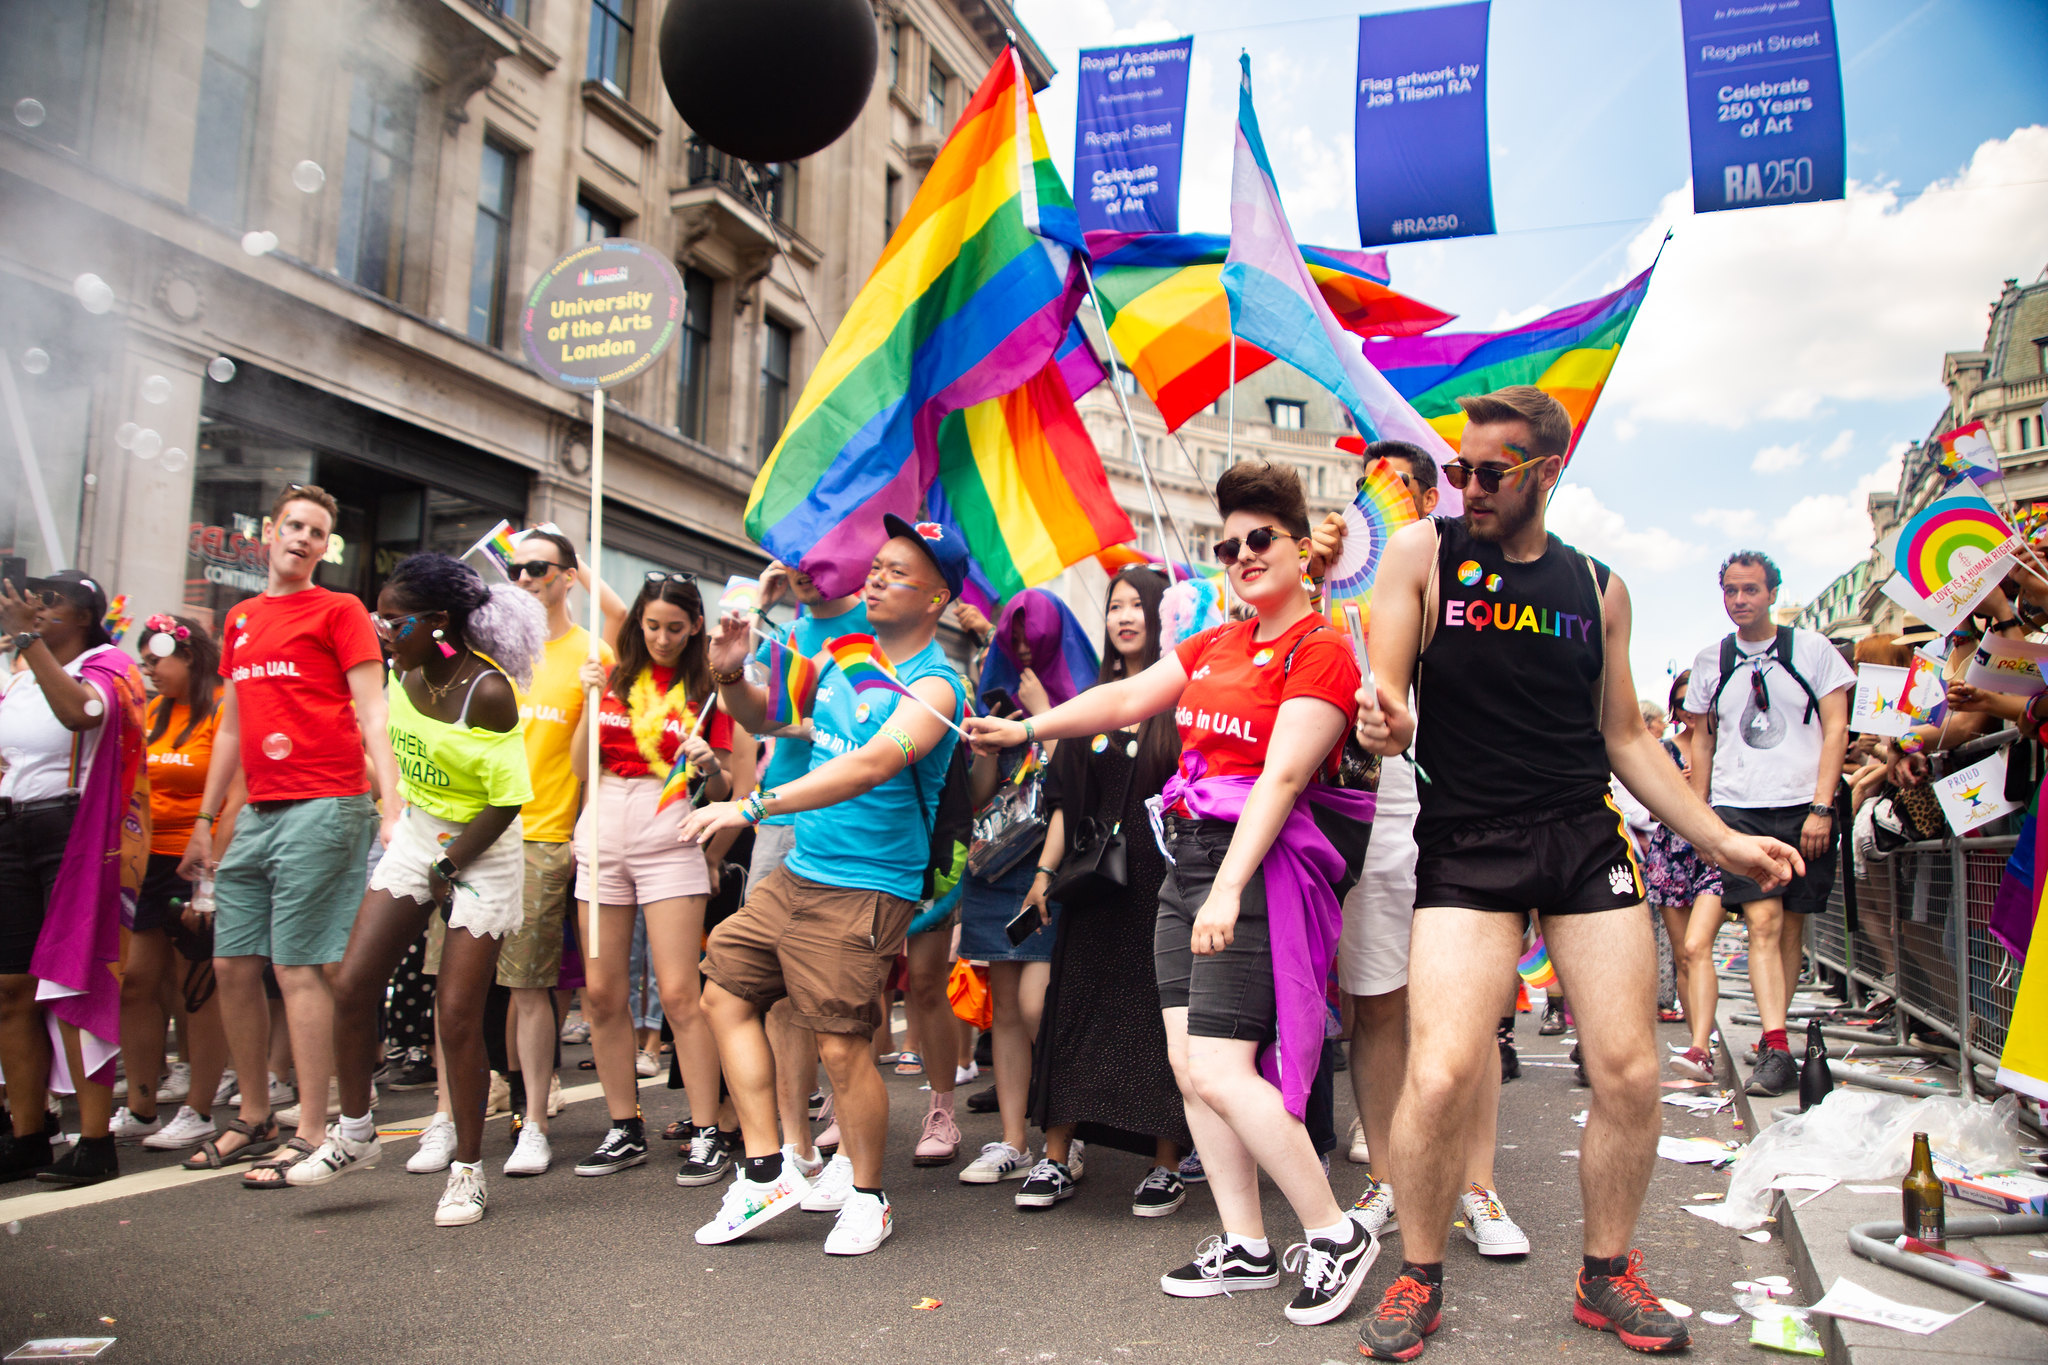 UAL staff celebrating at Pride in London 2019